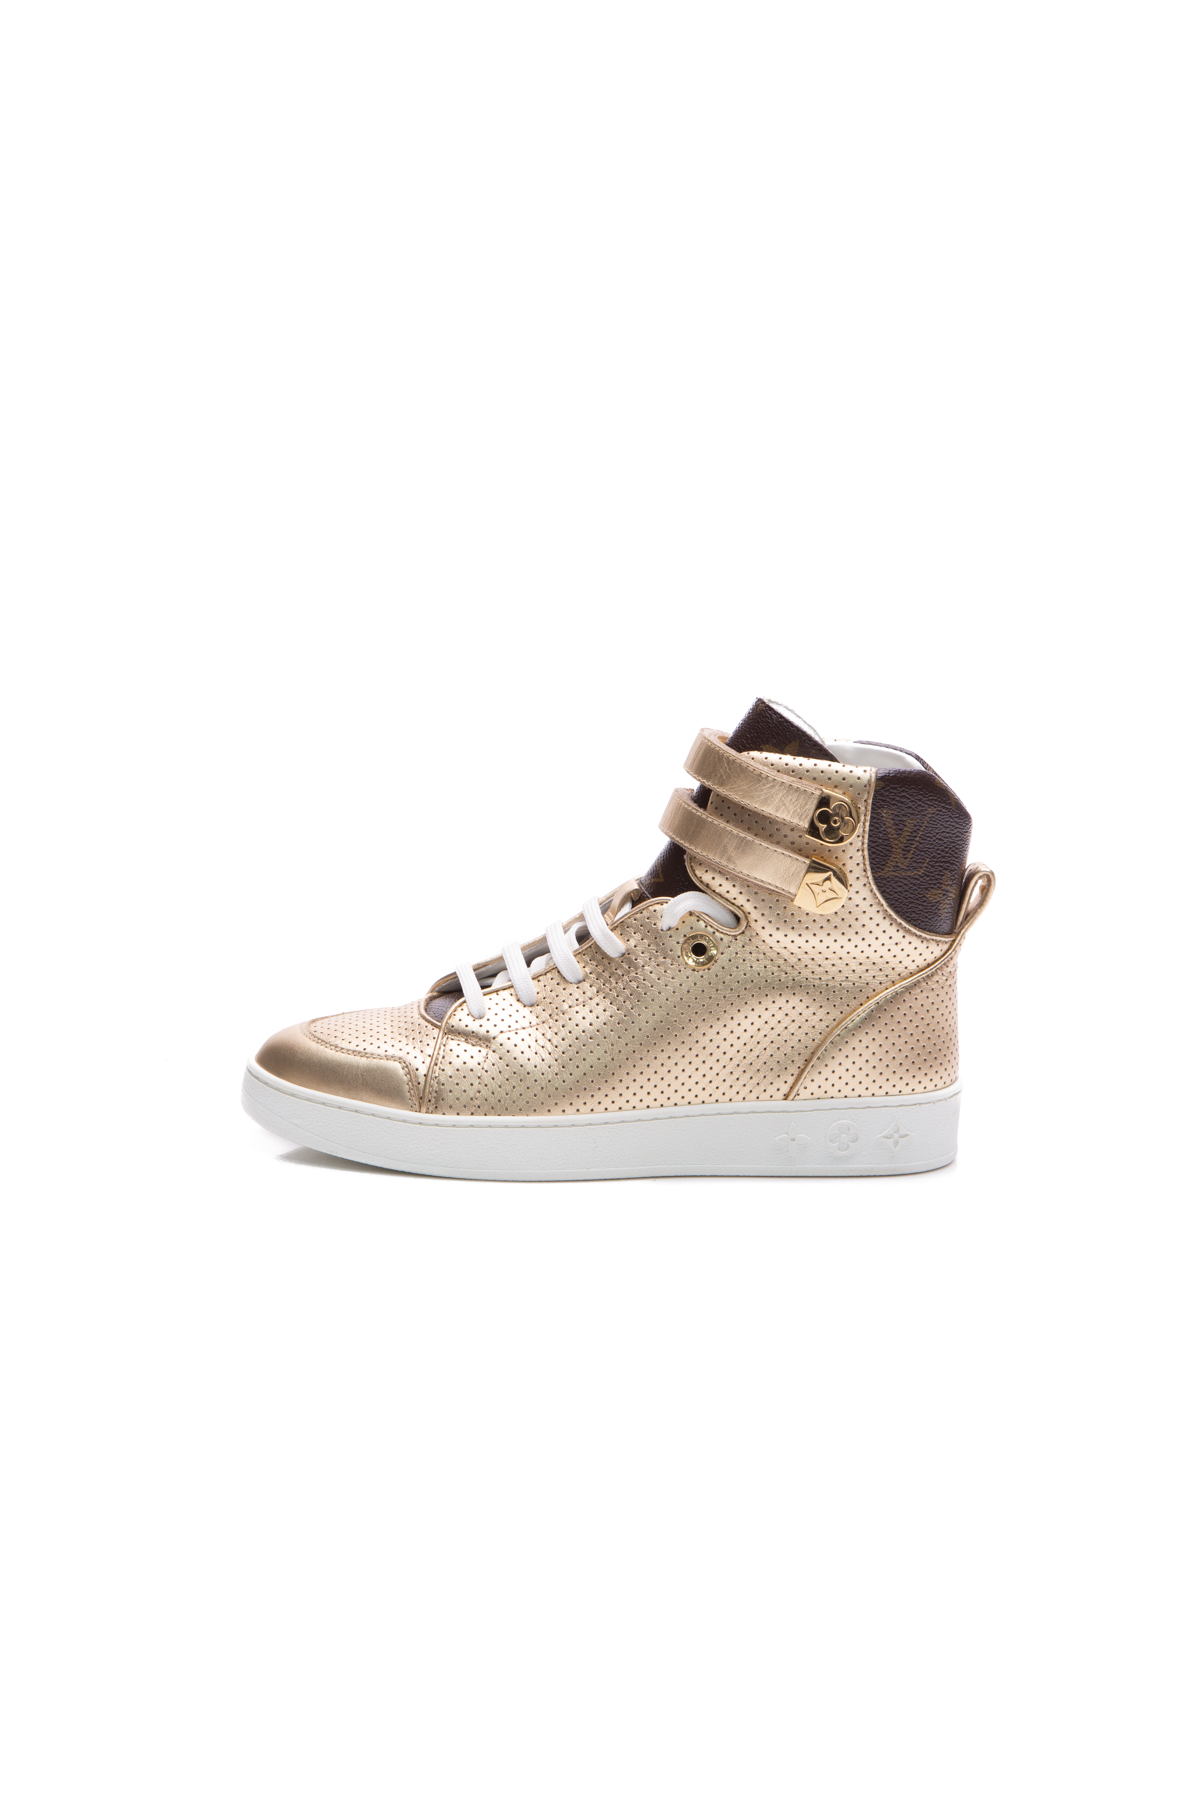 Louis Vuitton, Shoes, Louis Vuitton Boombox Sneaker